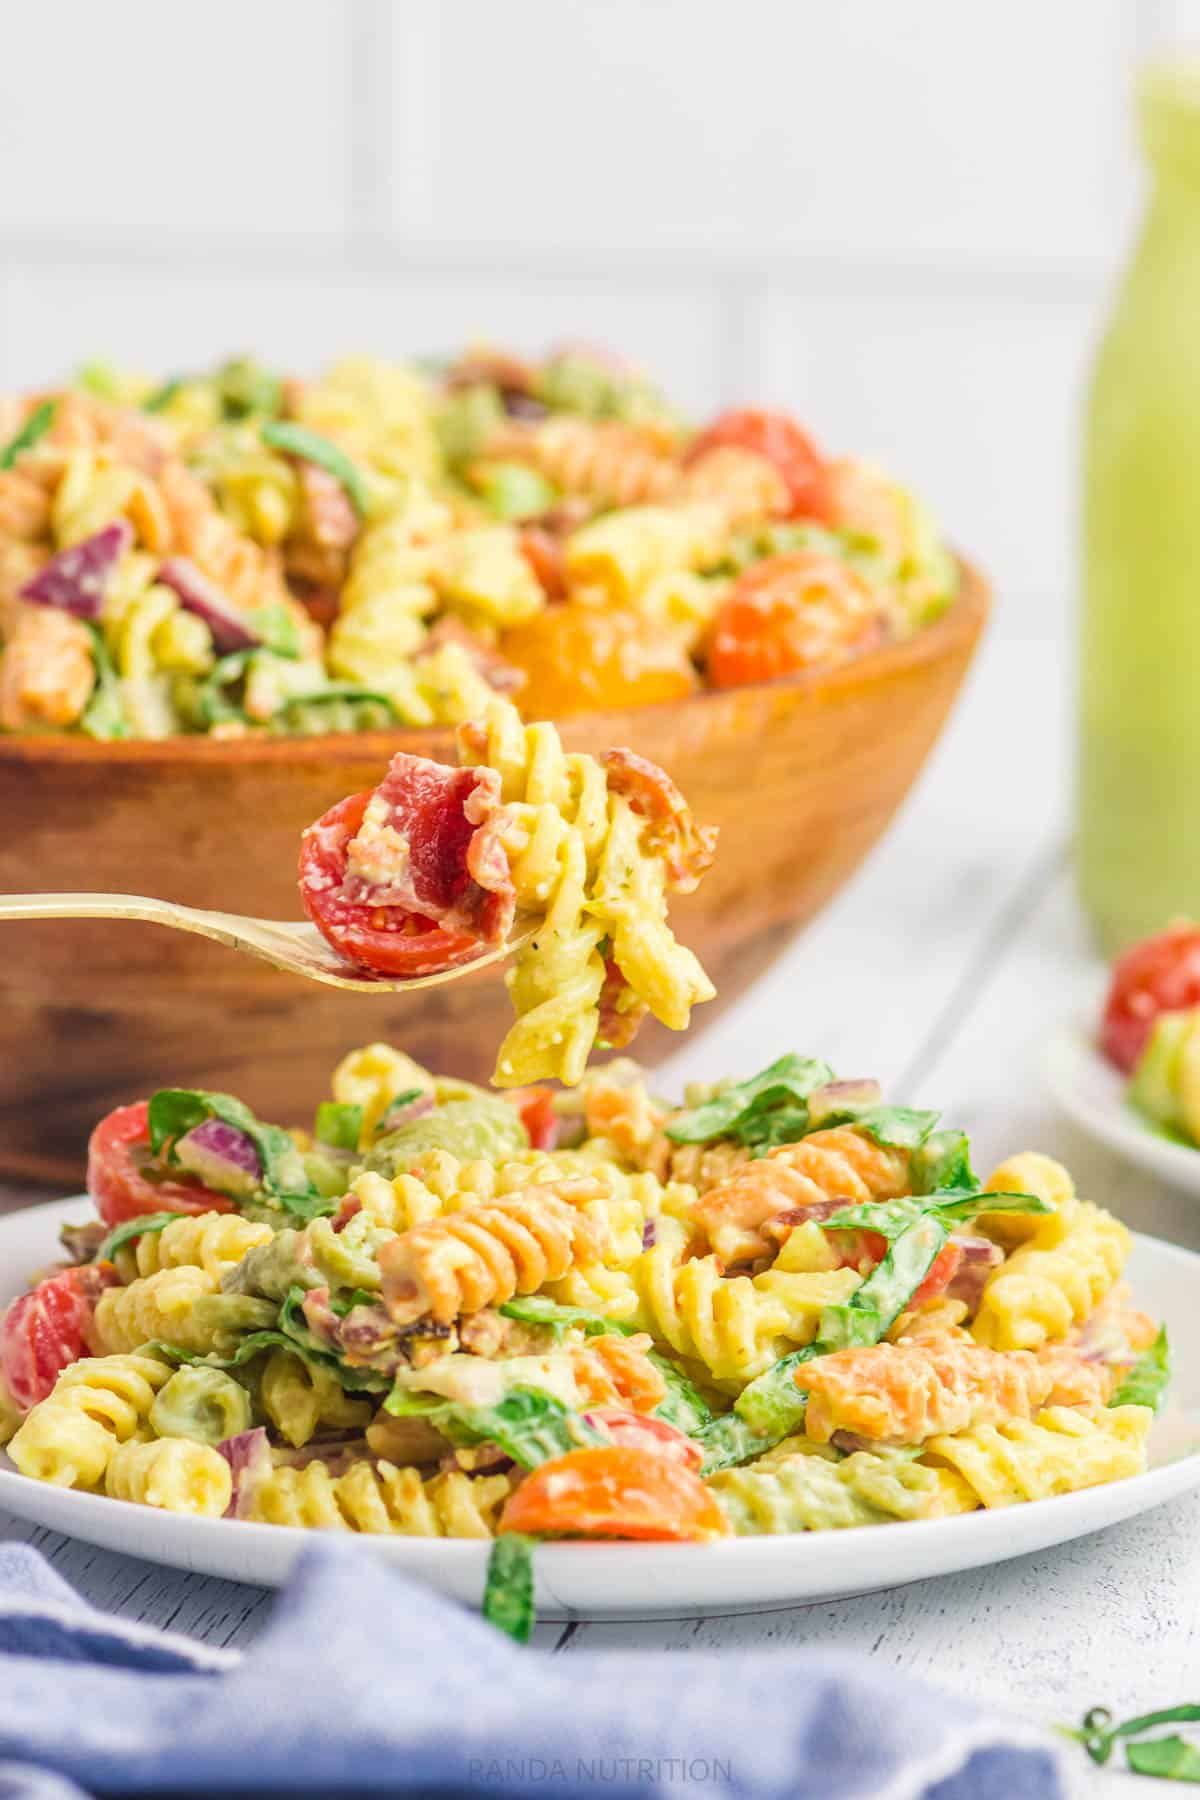 BLT Pasta Salad with Creamy Avocado Dressing | Randa Nutrition